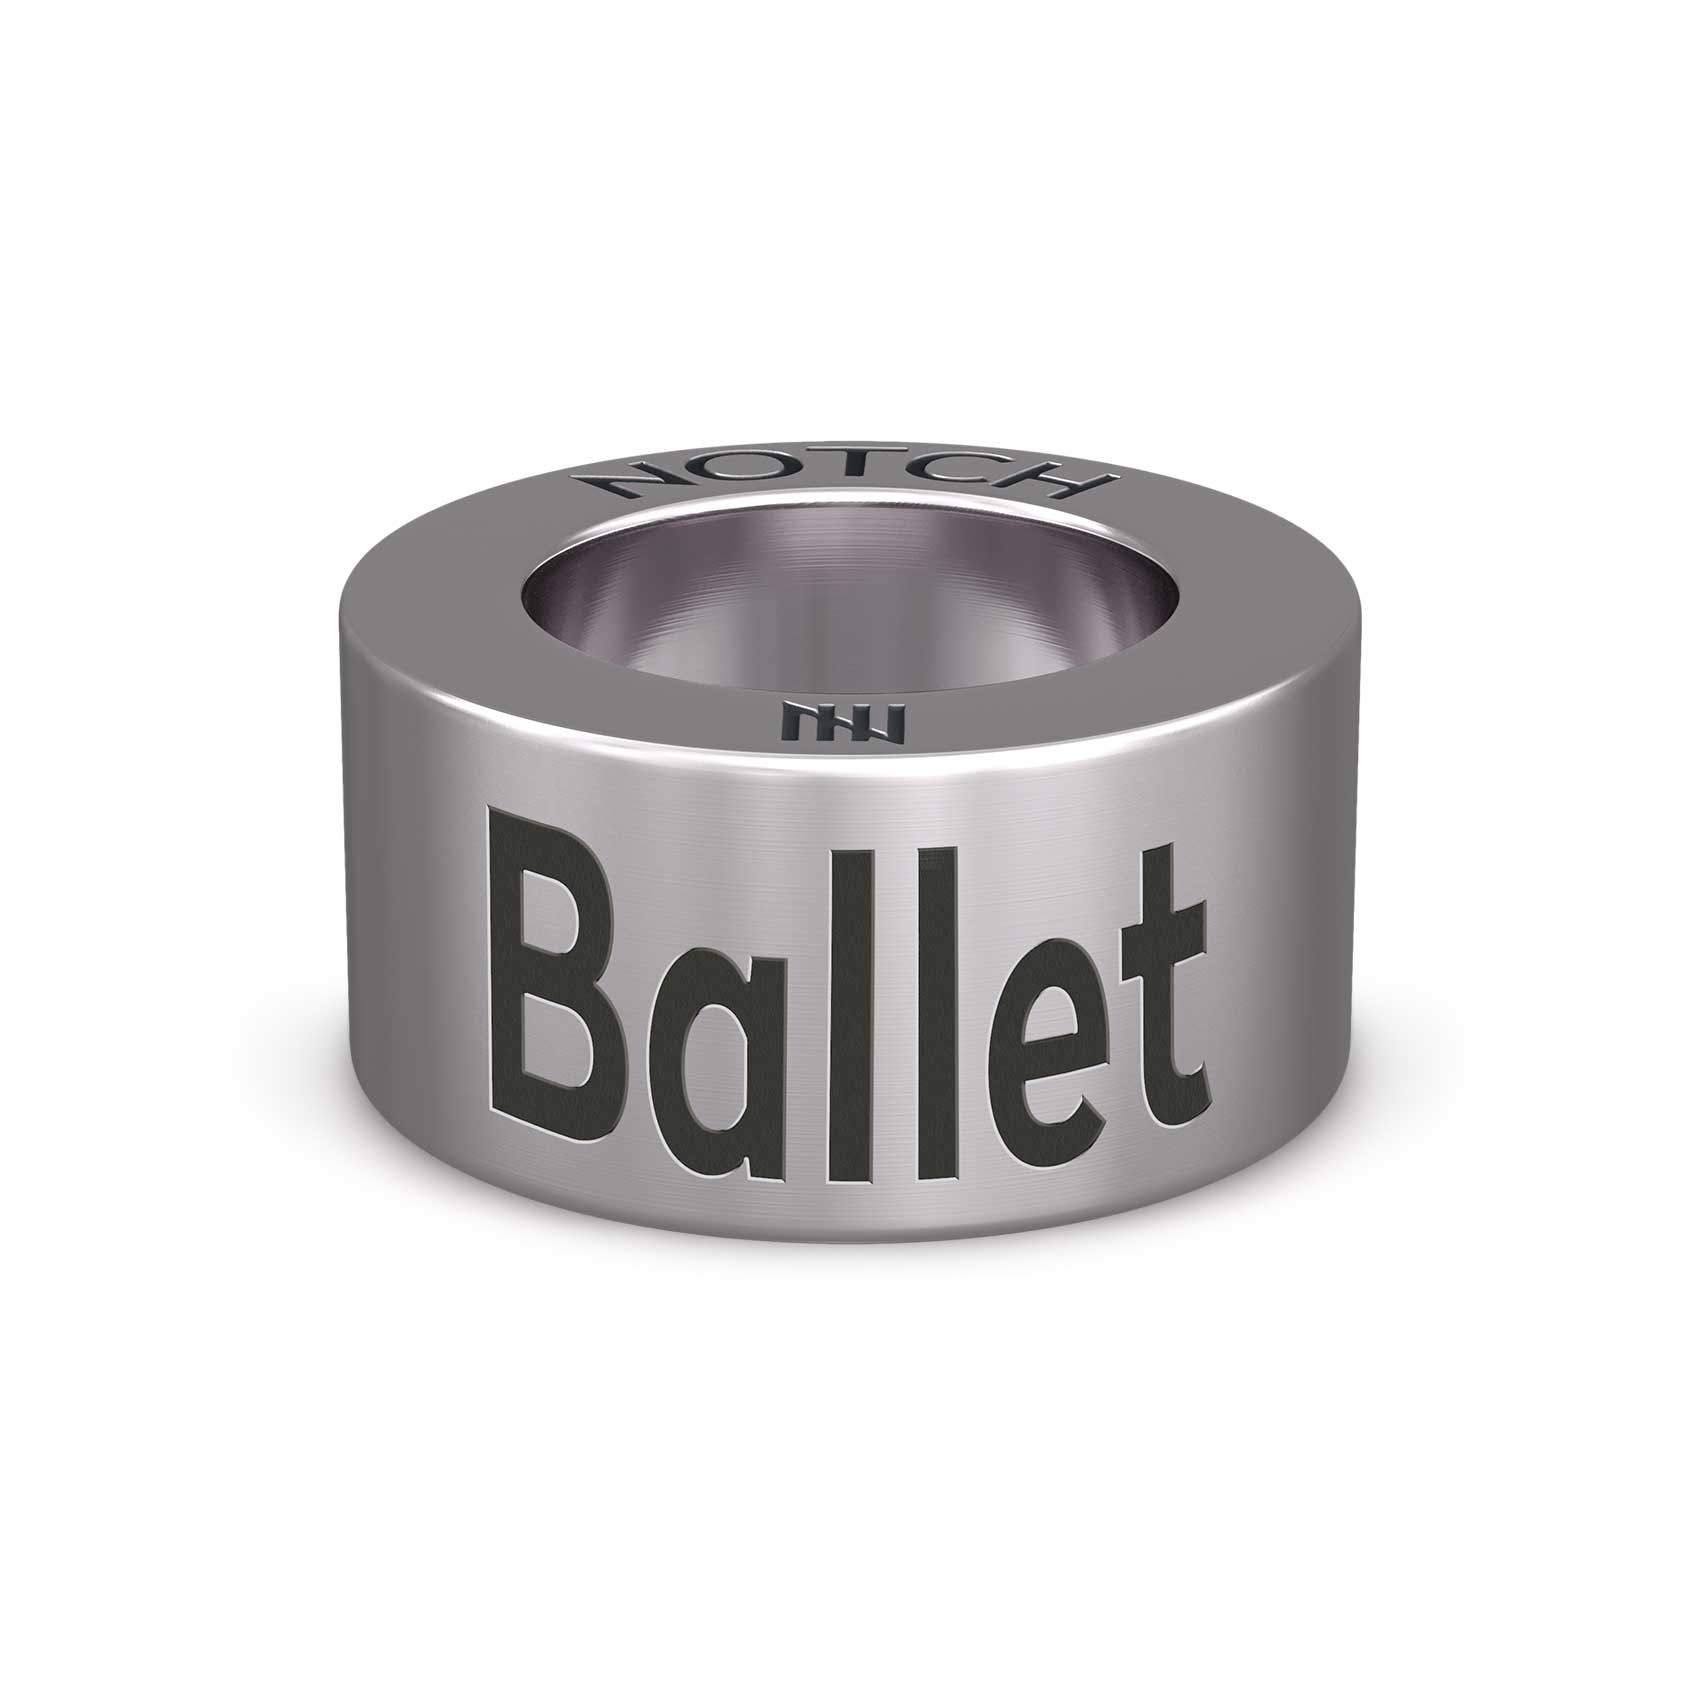 The Ballet NOTCH Charm (Full List)